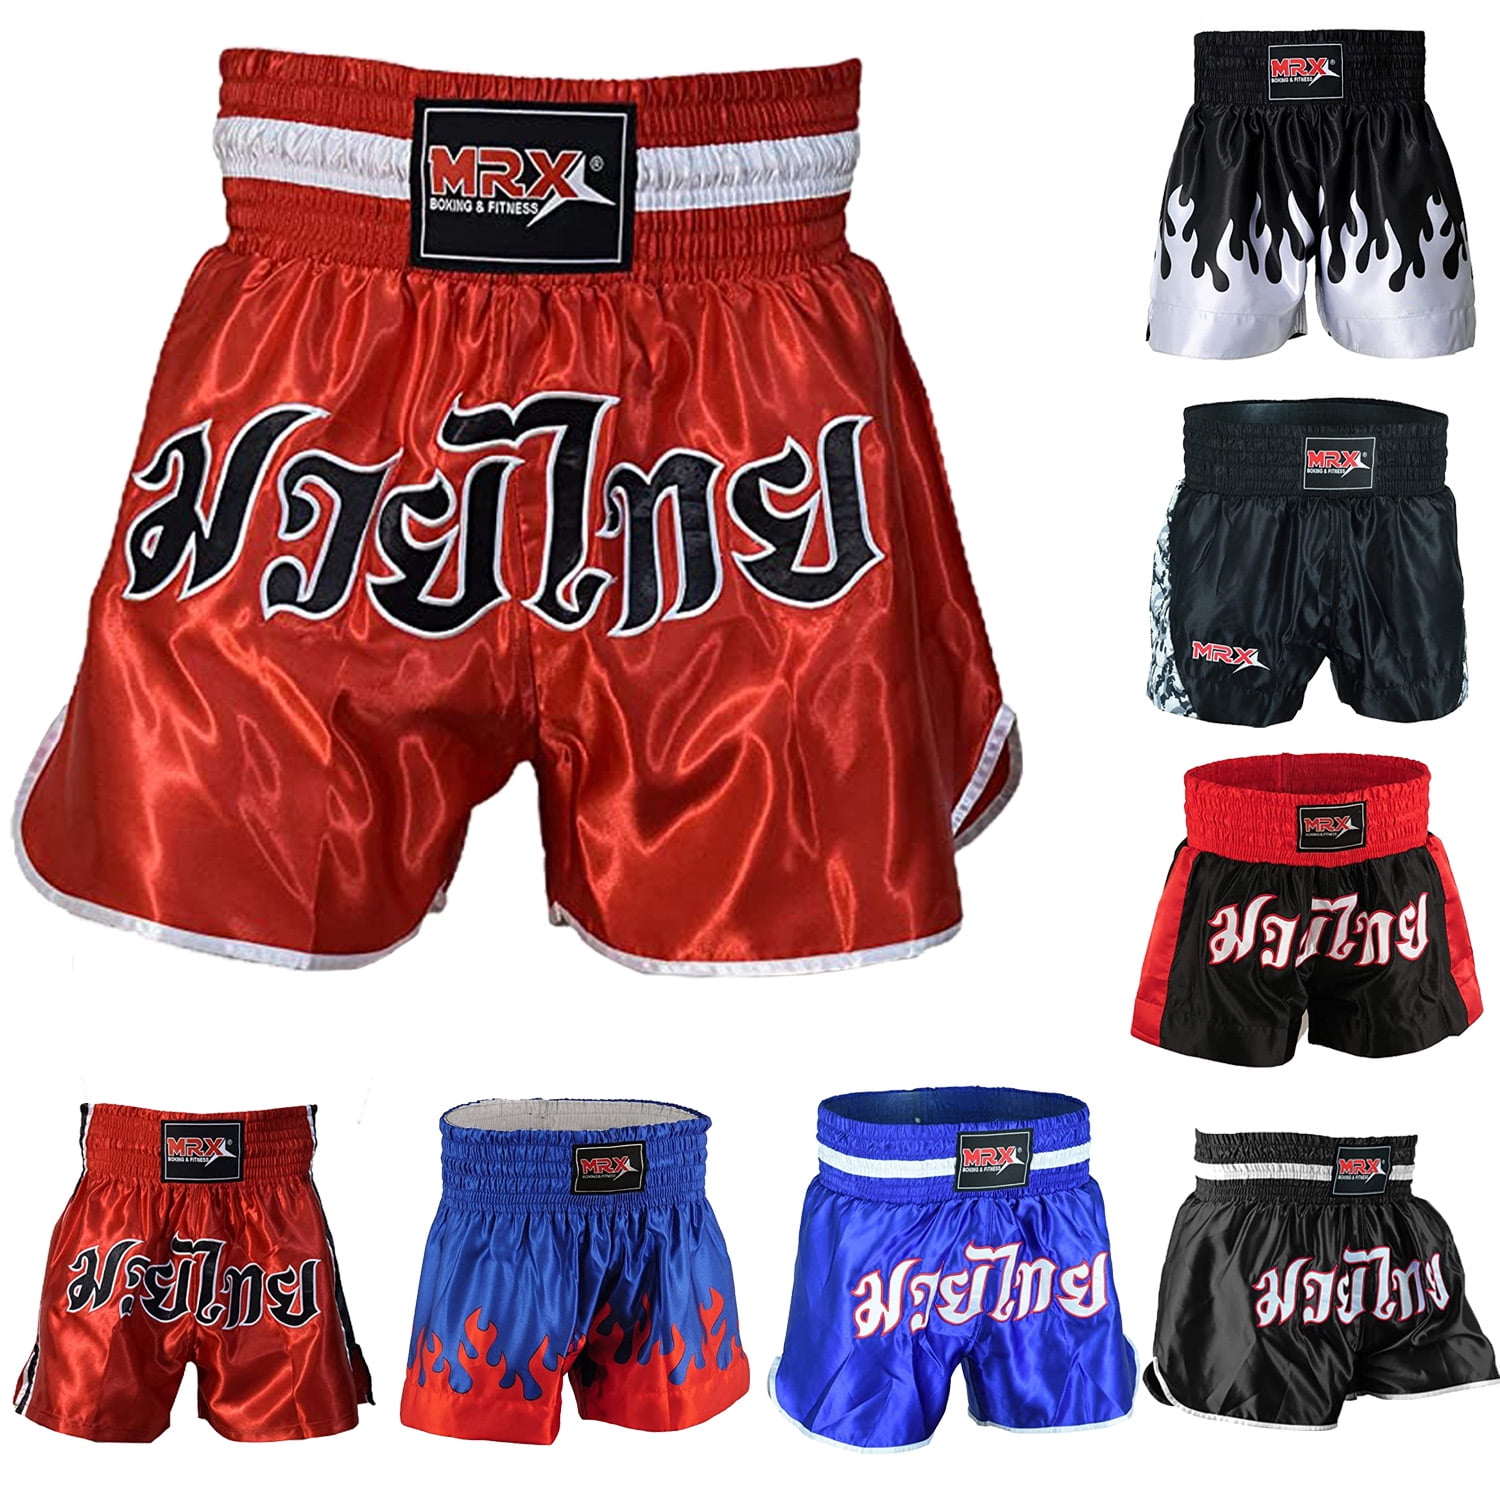 Men Breathable Printed Fitness Shorts Running Jiu Jitsu Boxing MMA Fight Shorts 